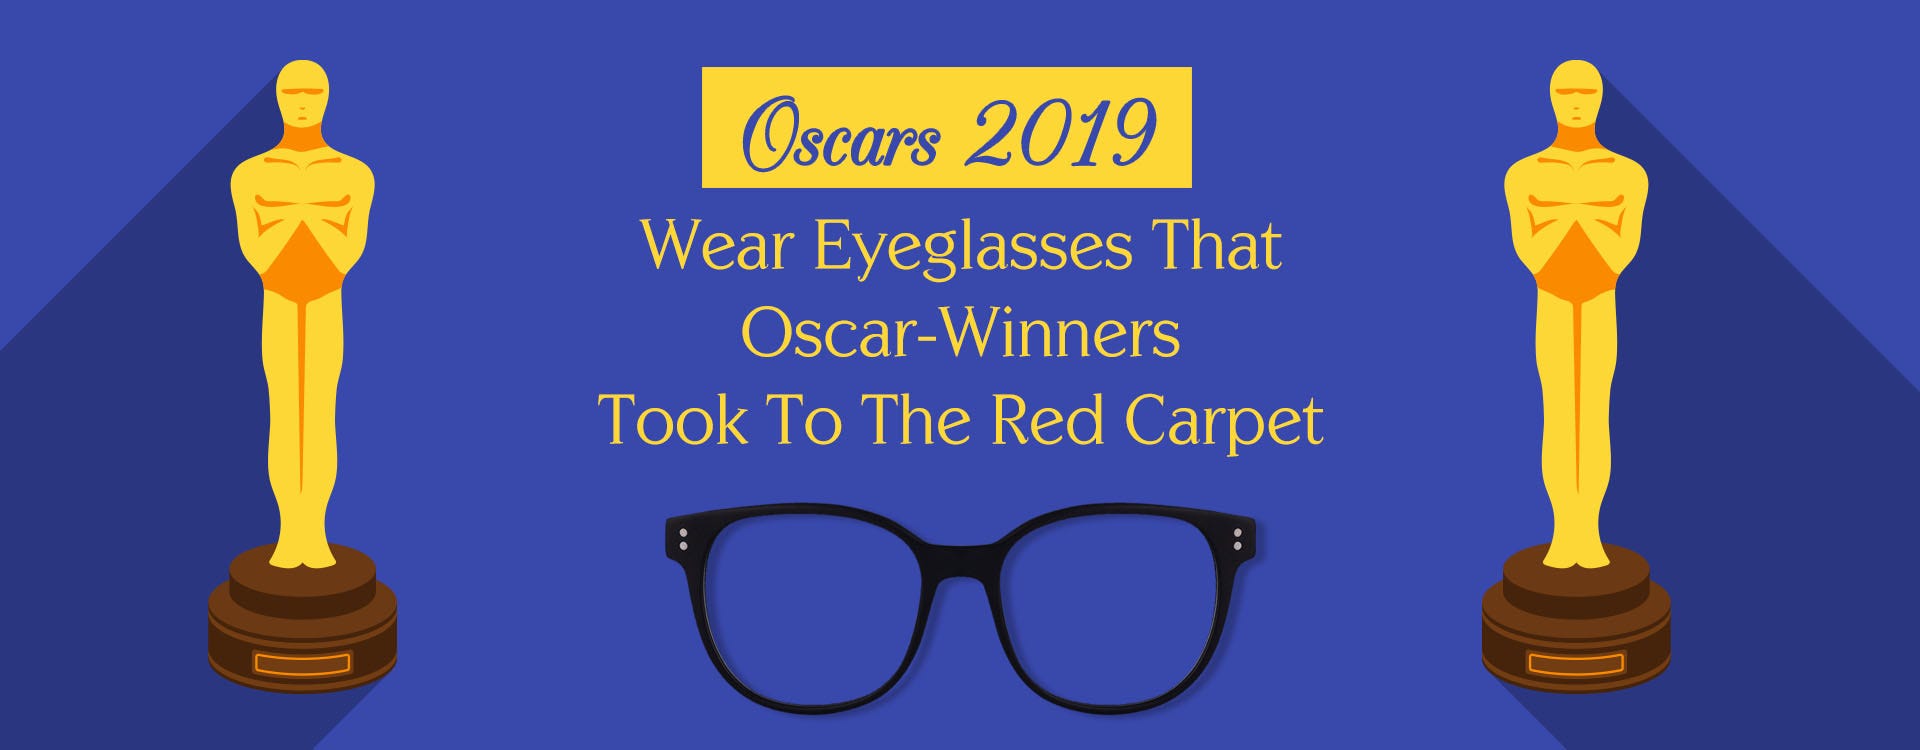 Oscar 2019: Wear Eyeglasses That Oscar-Winners Took To The Red Carpet